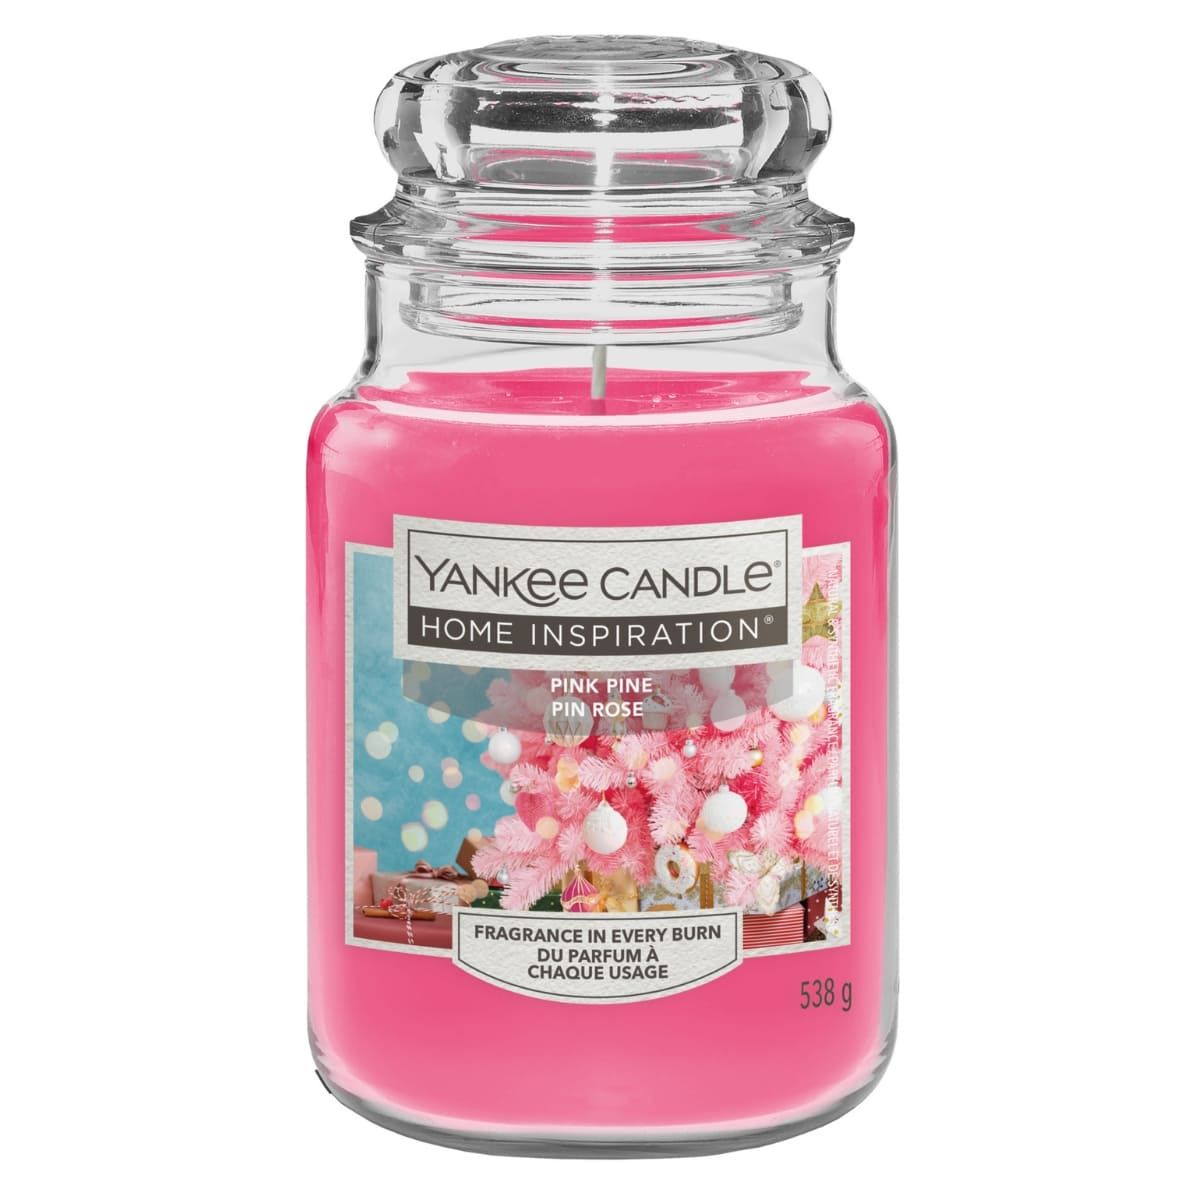 Ароматическая Свеча Yankee Candle Home Inspiration Pink Pine, 538 гр yankee candle home inspiration sugar blossom большая ароматическая свеча 538 г